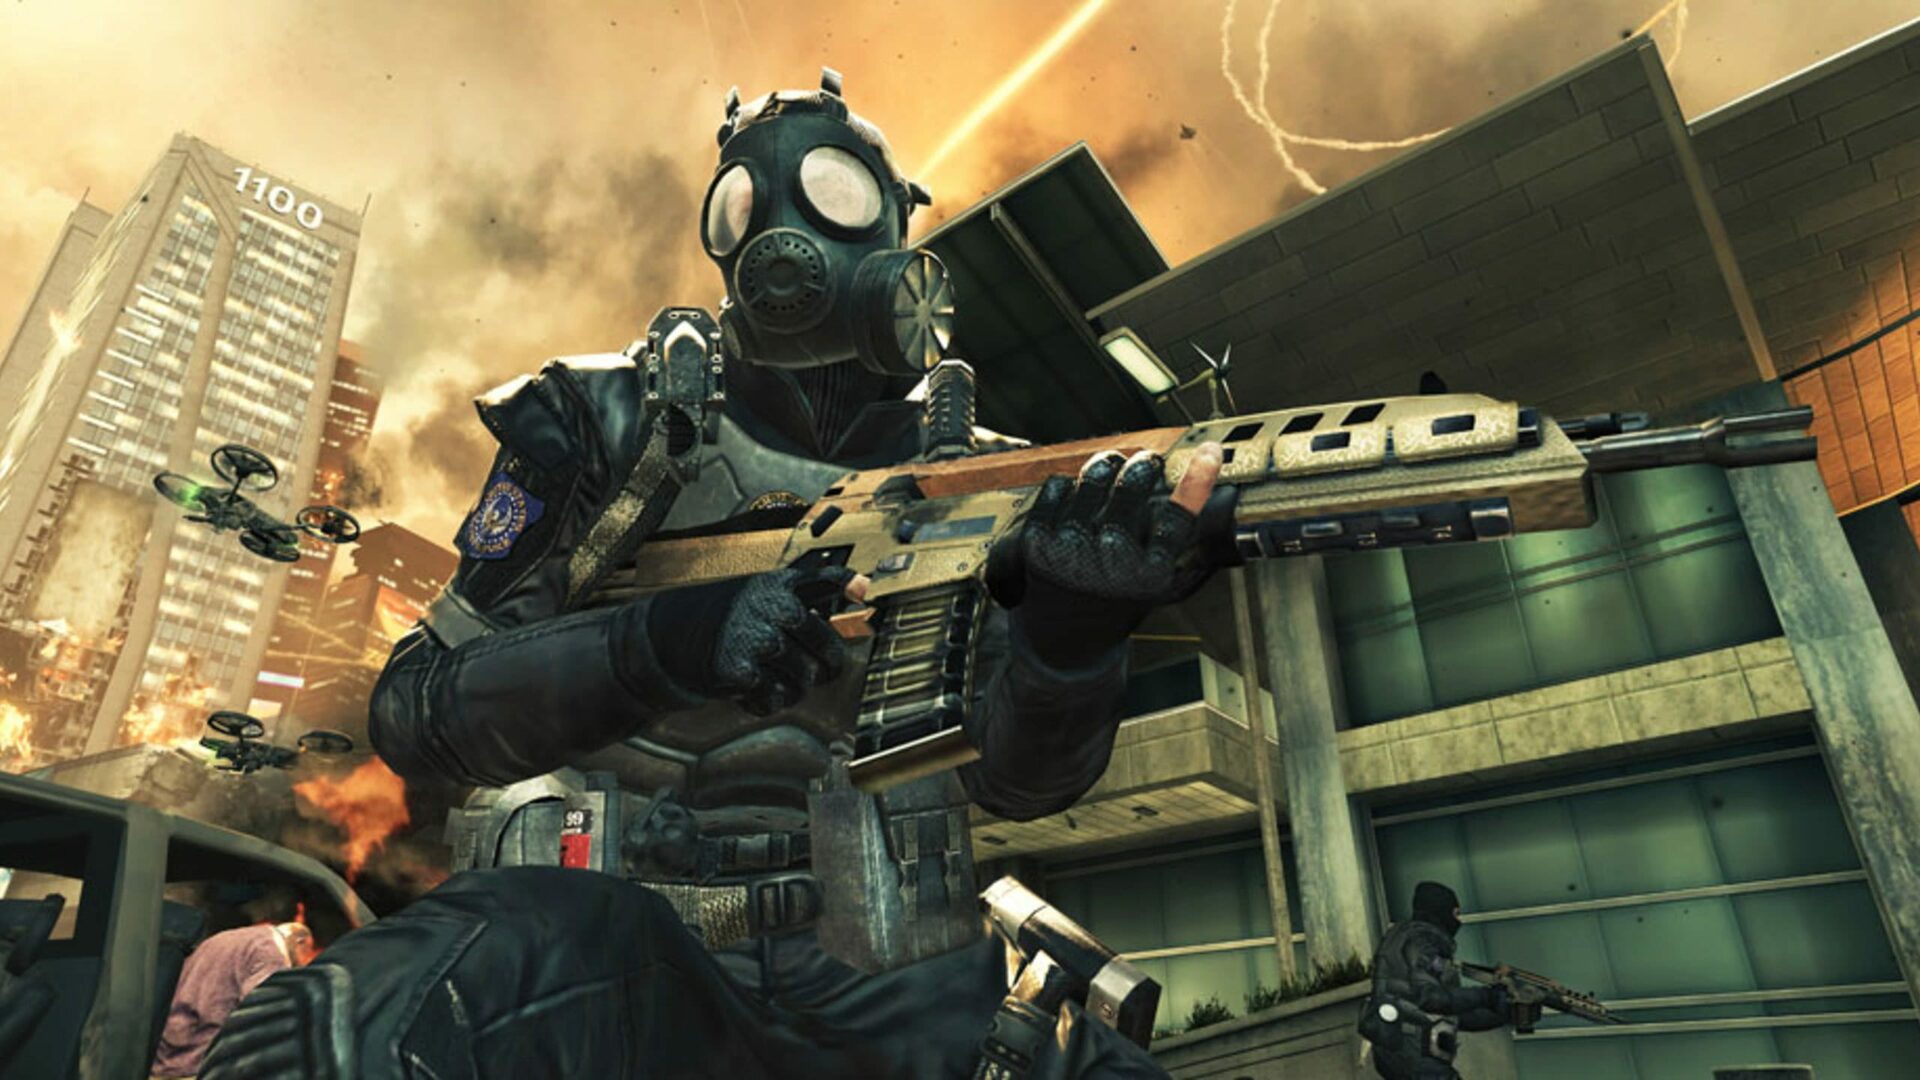 Buy Call of Duty: Black Ops II Steam Key POLAND - Cheap - !